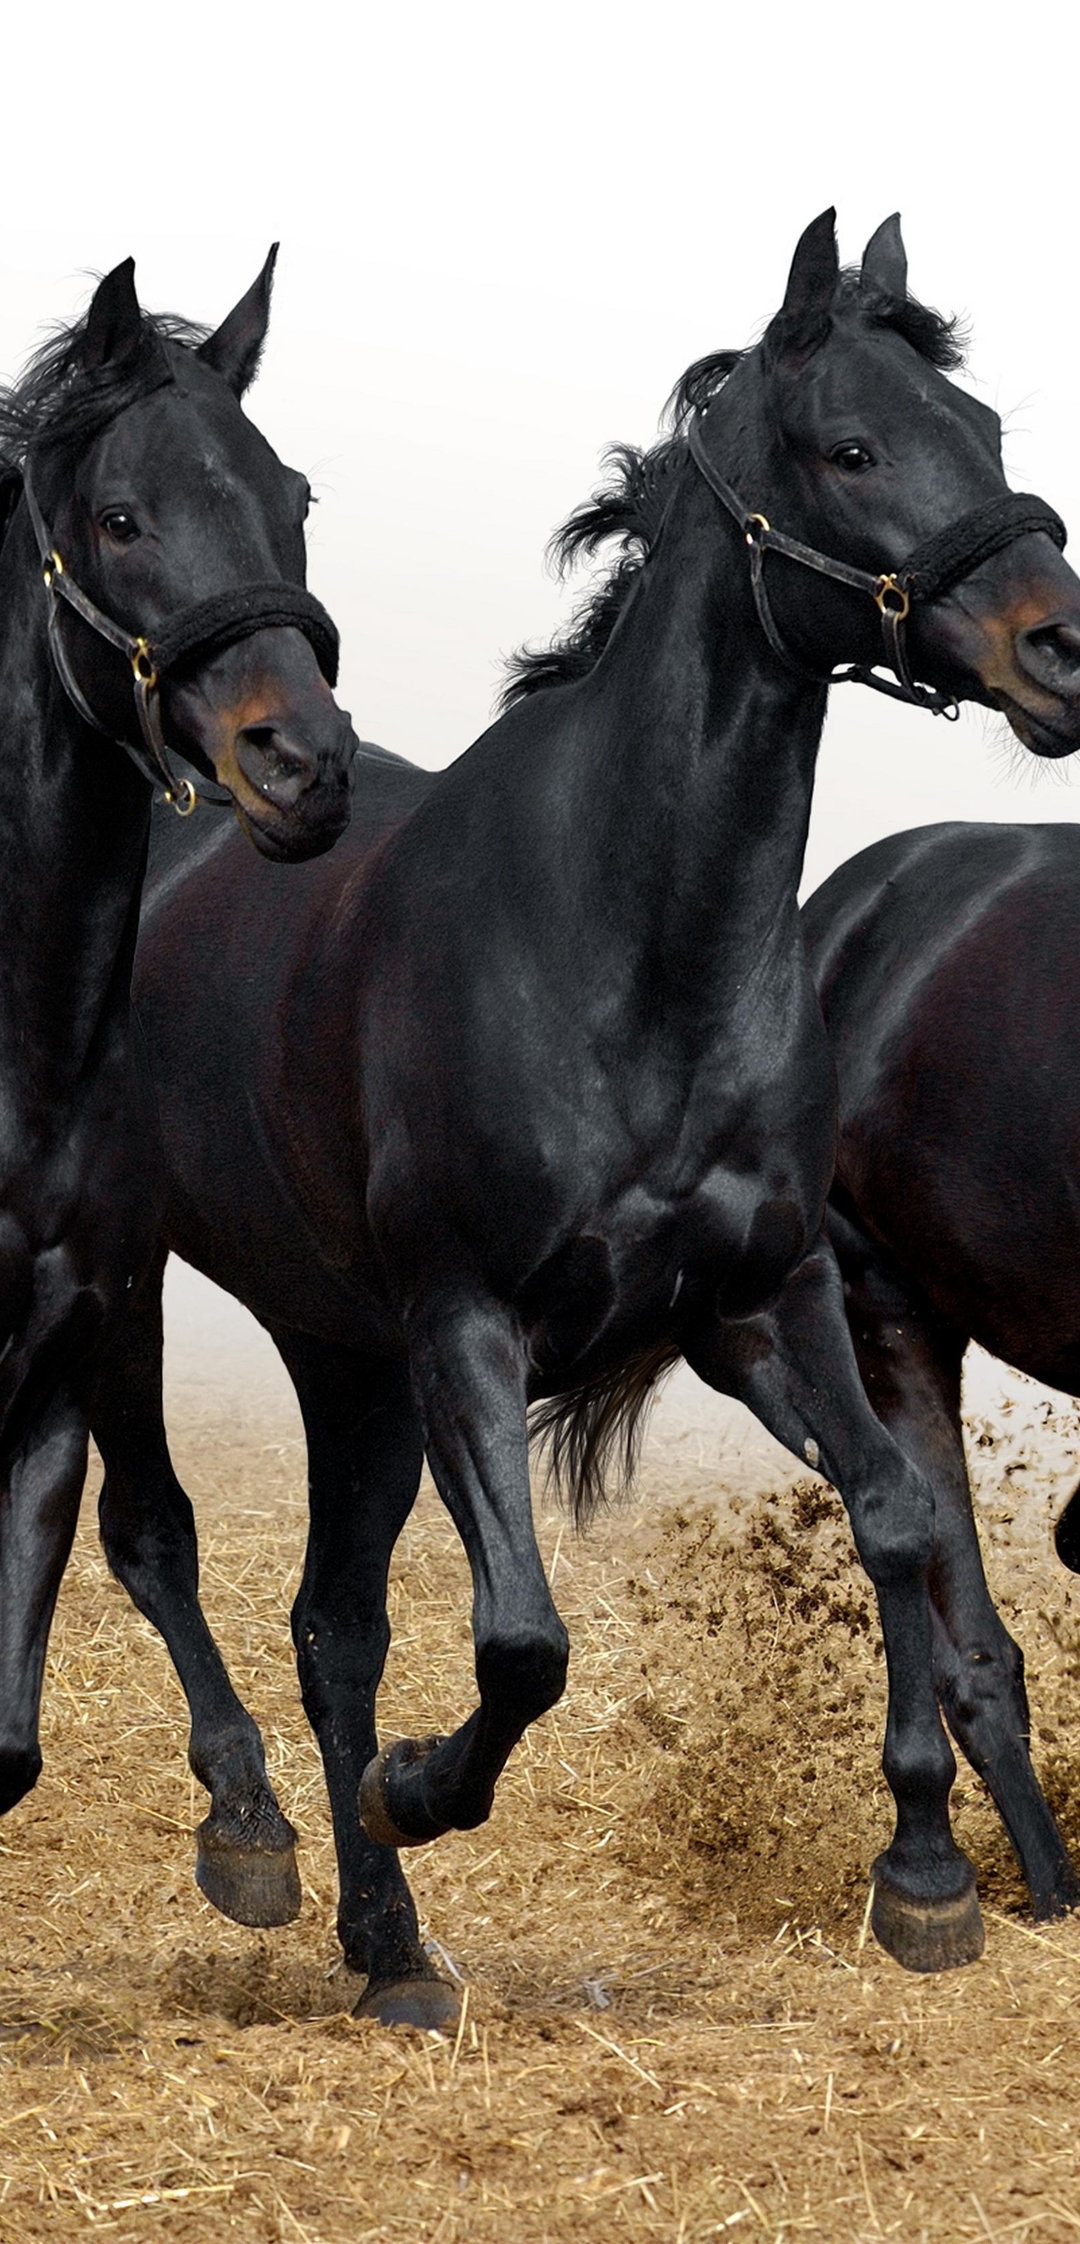 Картинка: Три, лошади, кони, бегут, скачут, грива, чёрные, хвост, копыта